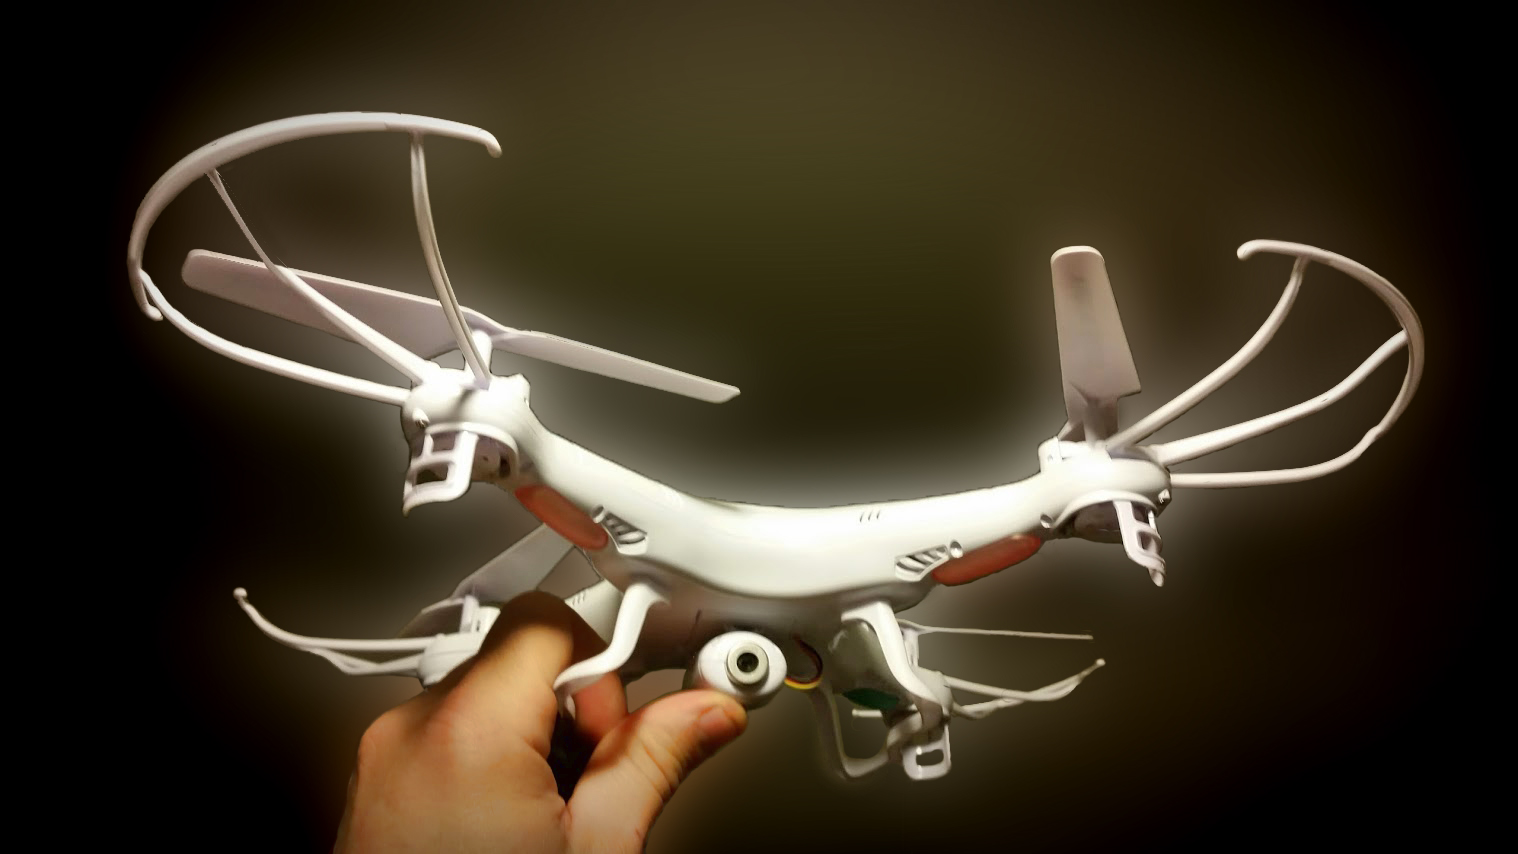 Syma X5C drone